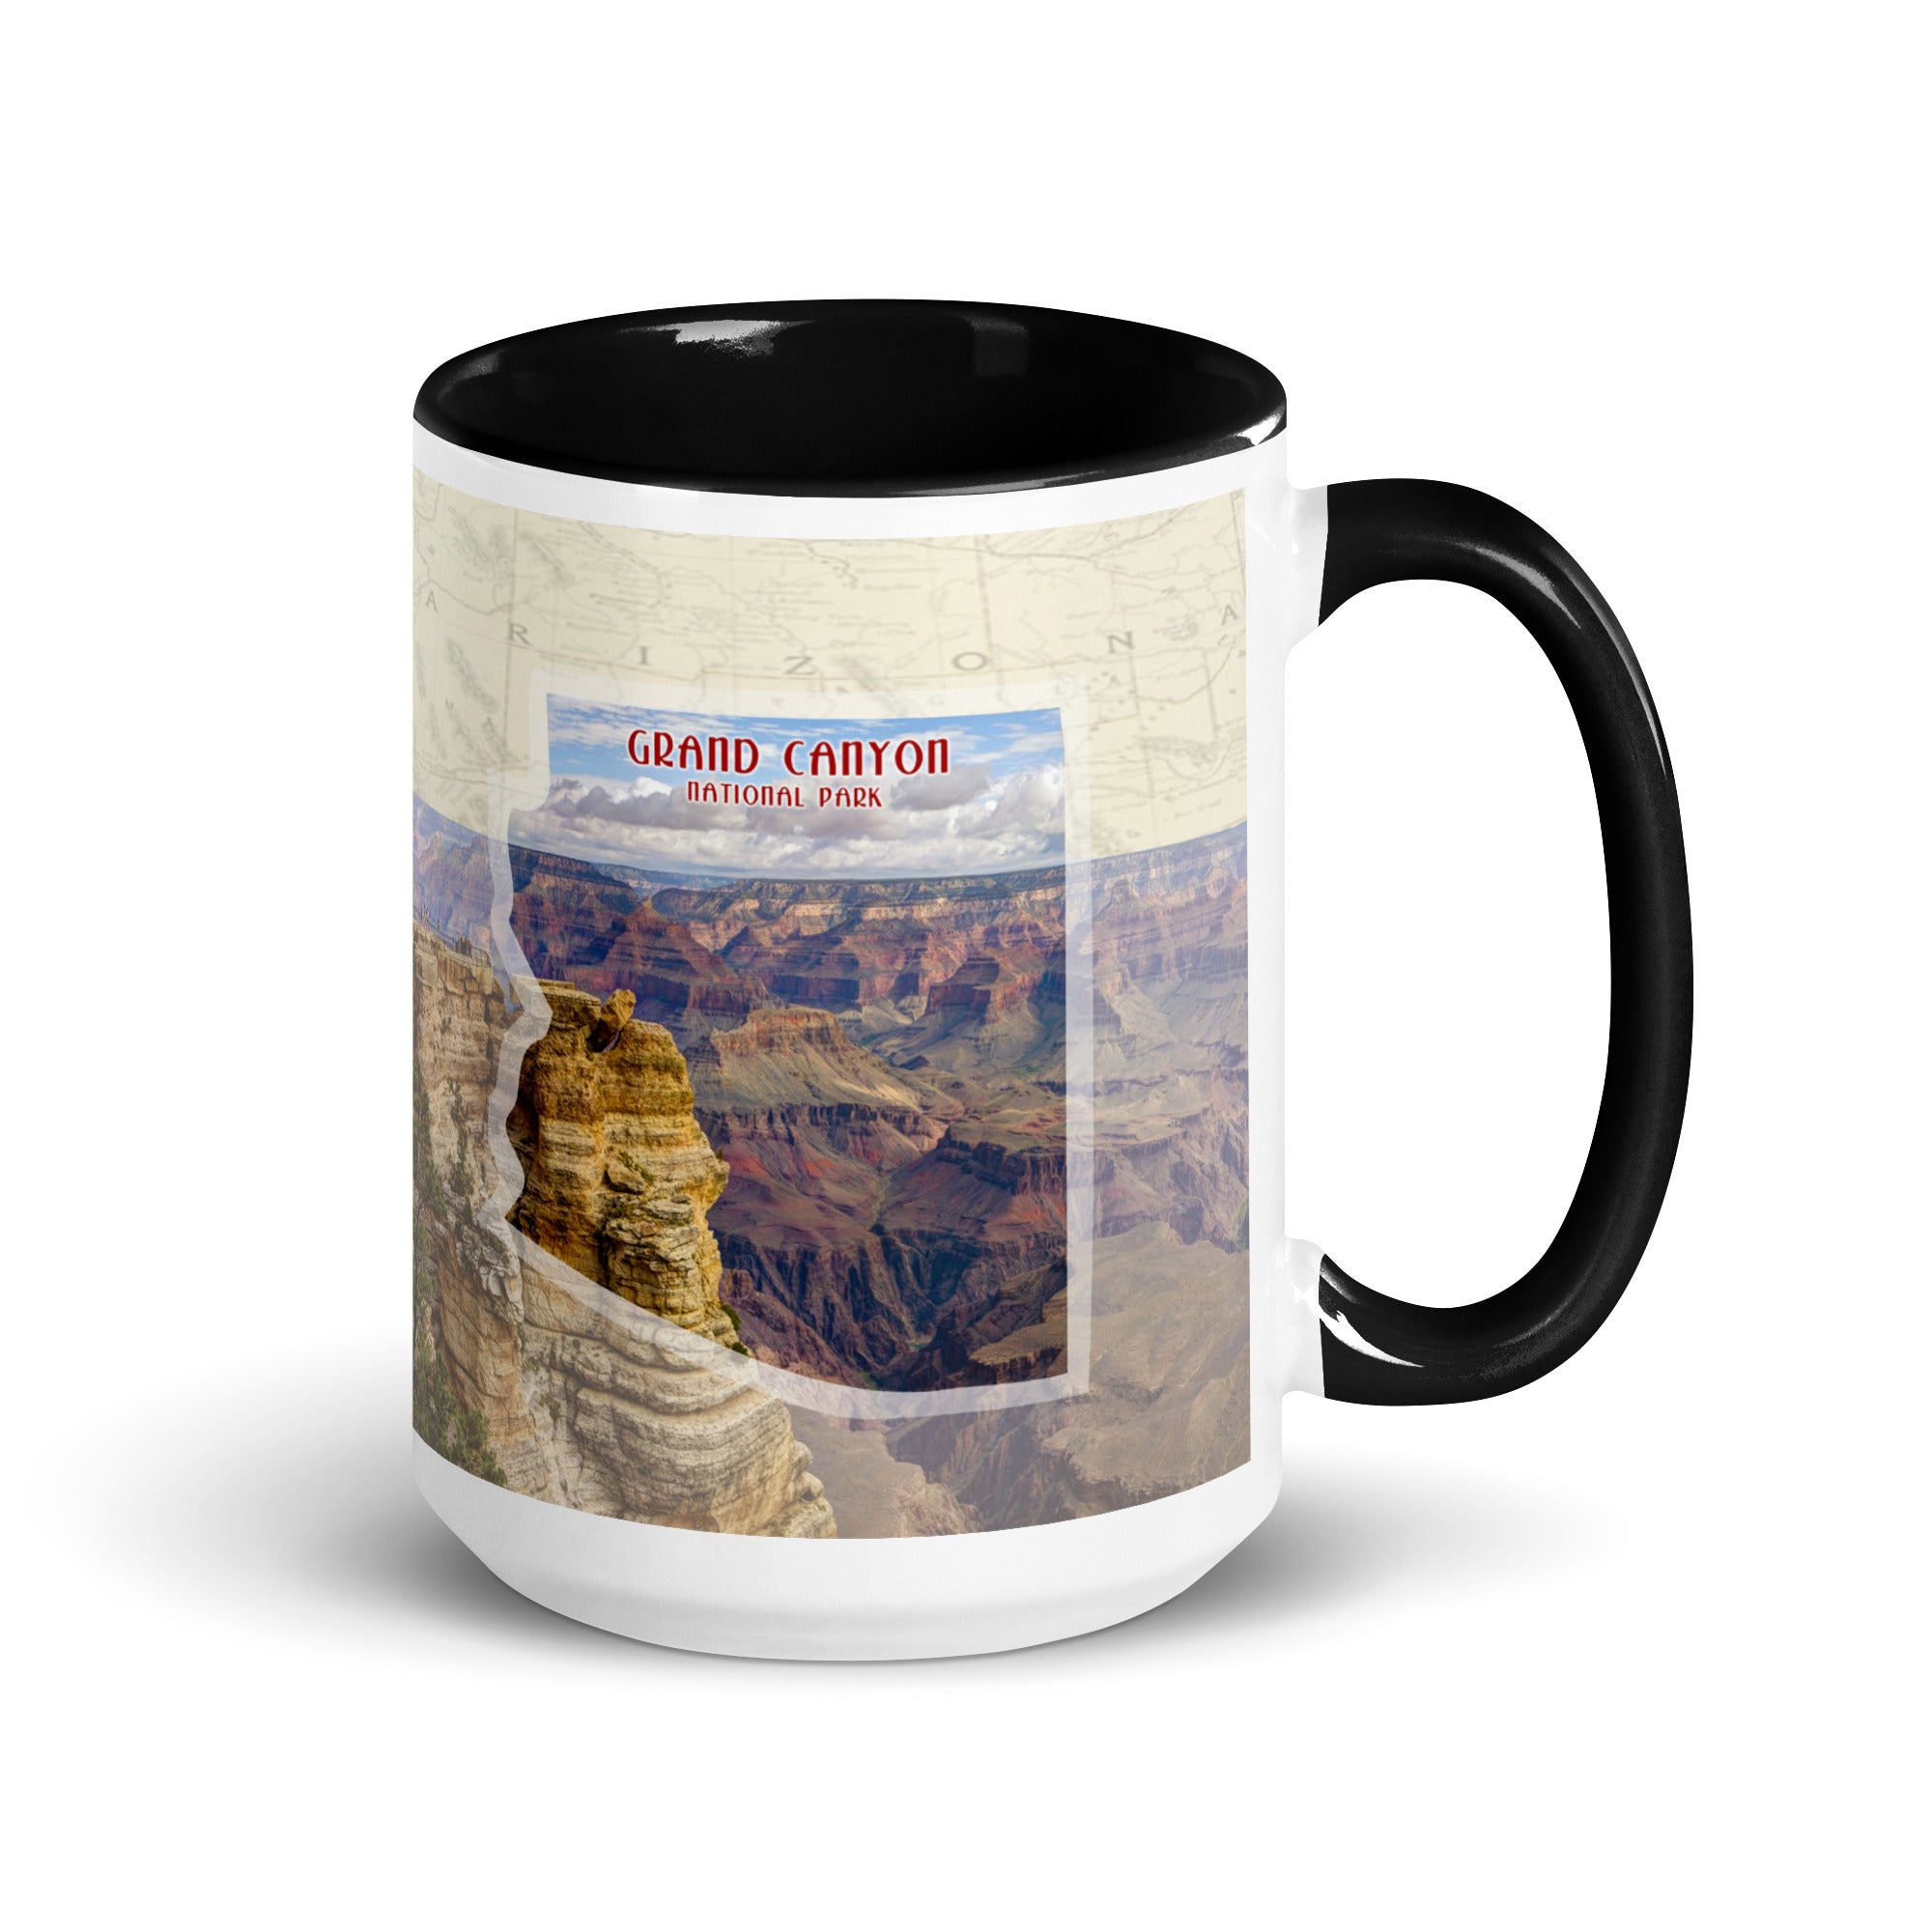 Grand Canyon National Park Mug with Black Inside